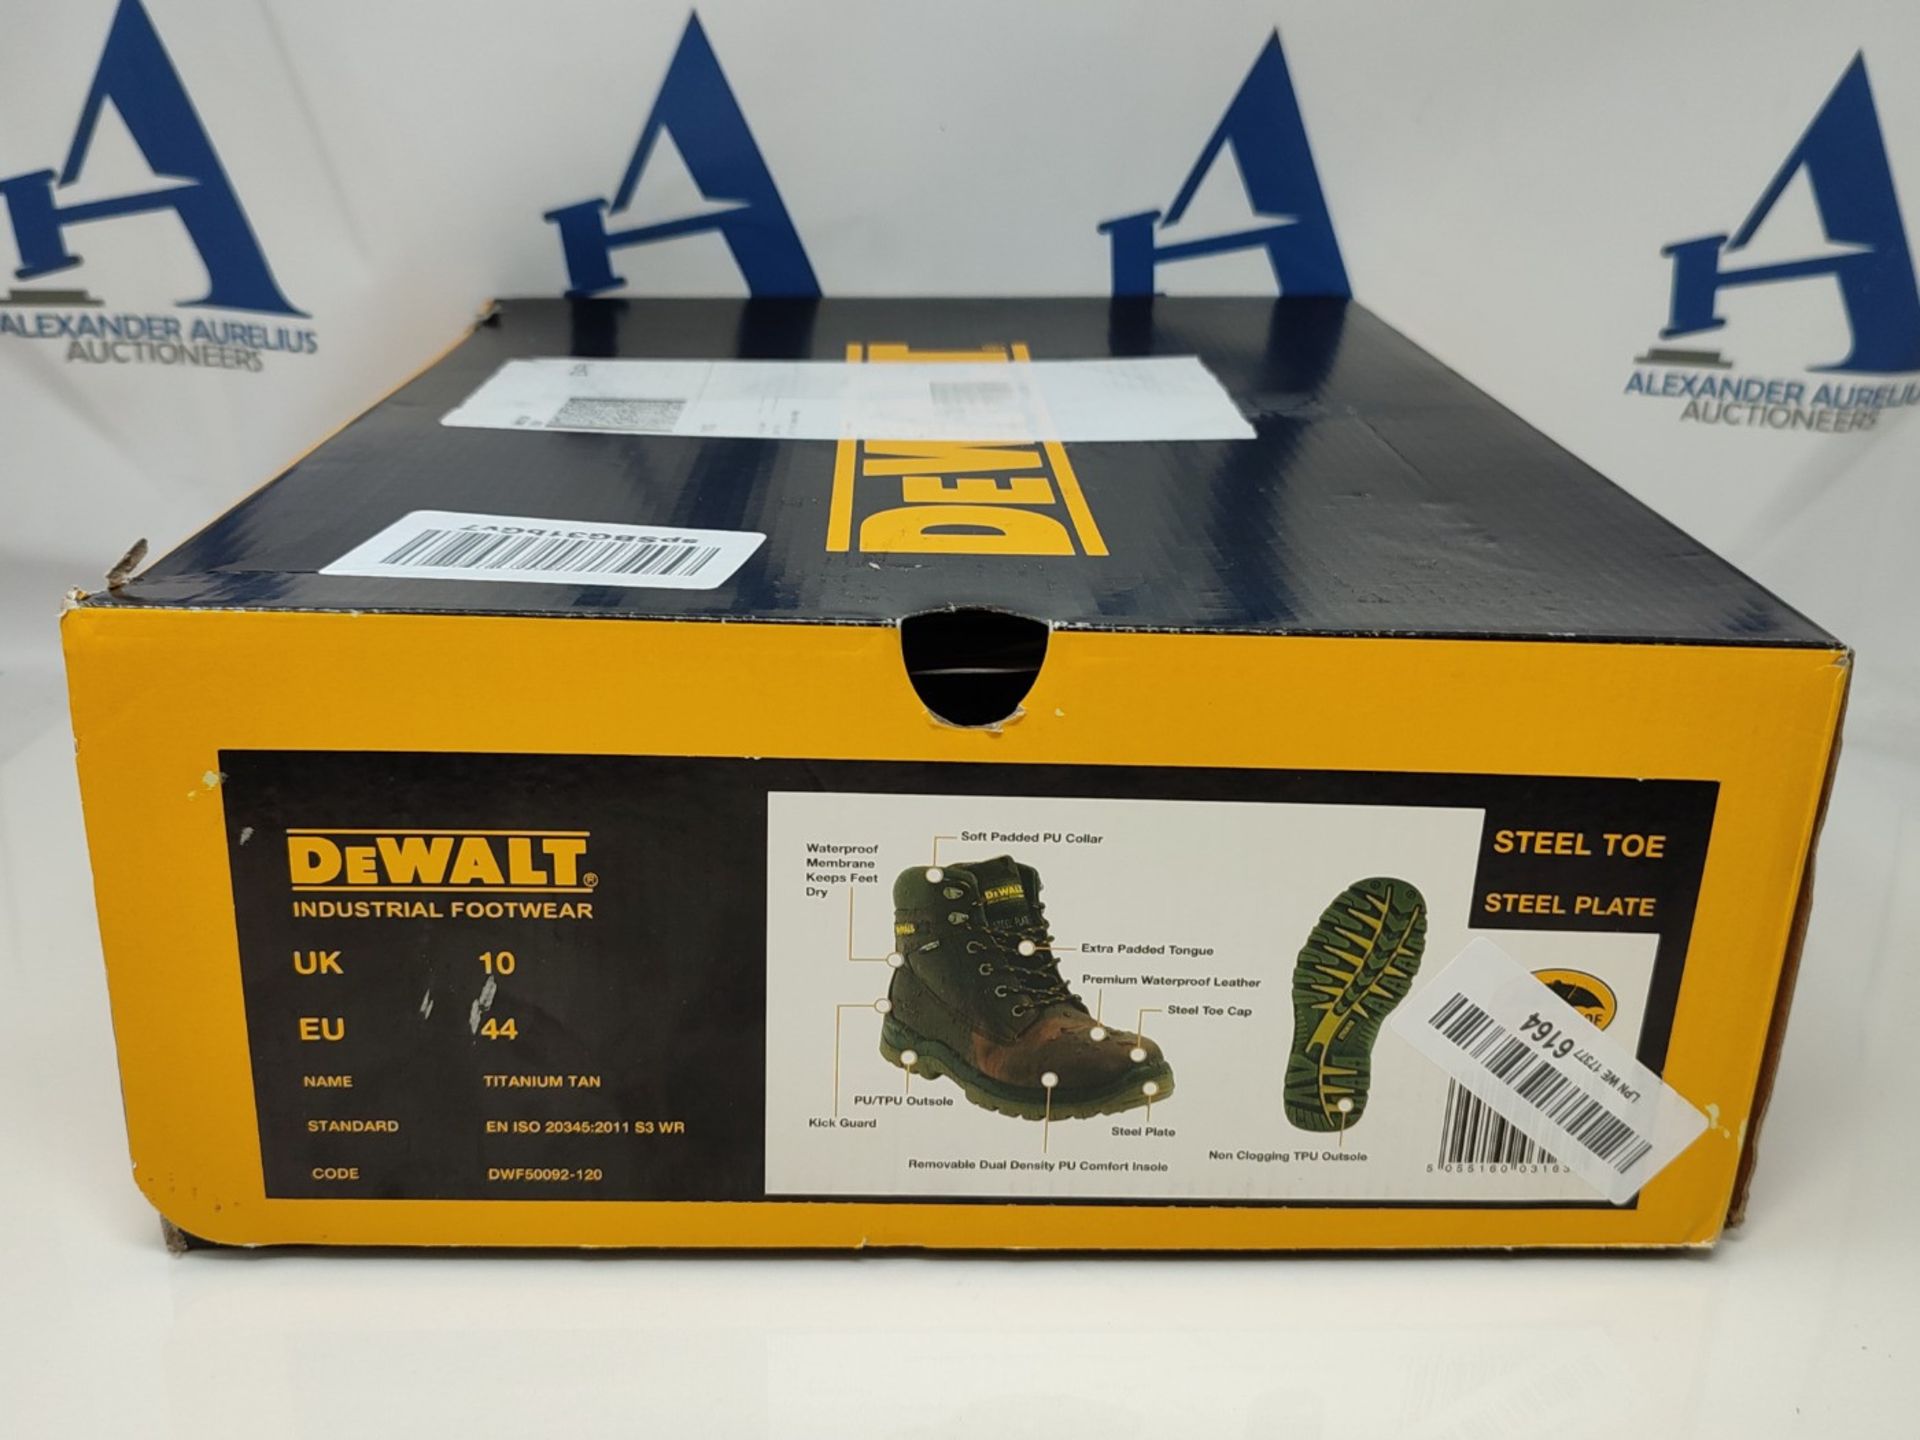 RRP £75.00 DEWALT Men's Titanium S3 Safety Boots Tan UK 10 EUR 44, Titanium Tan, UK - Image 2 of 3